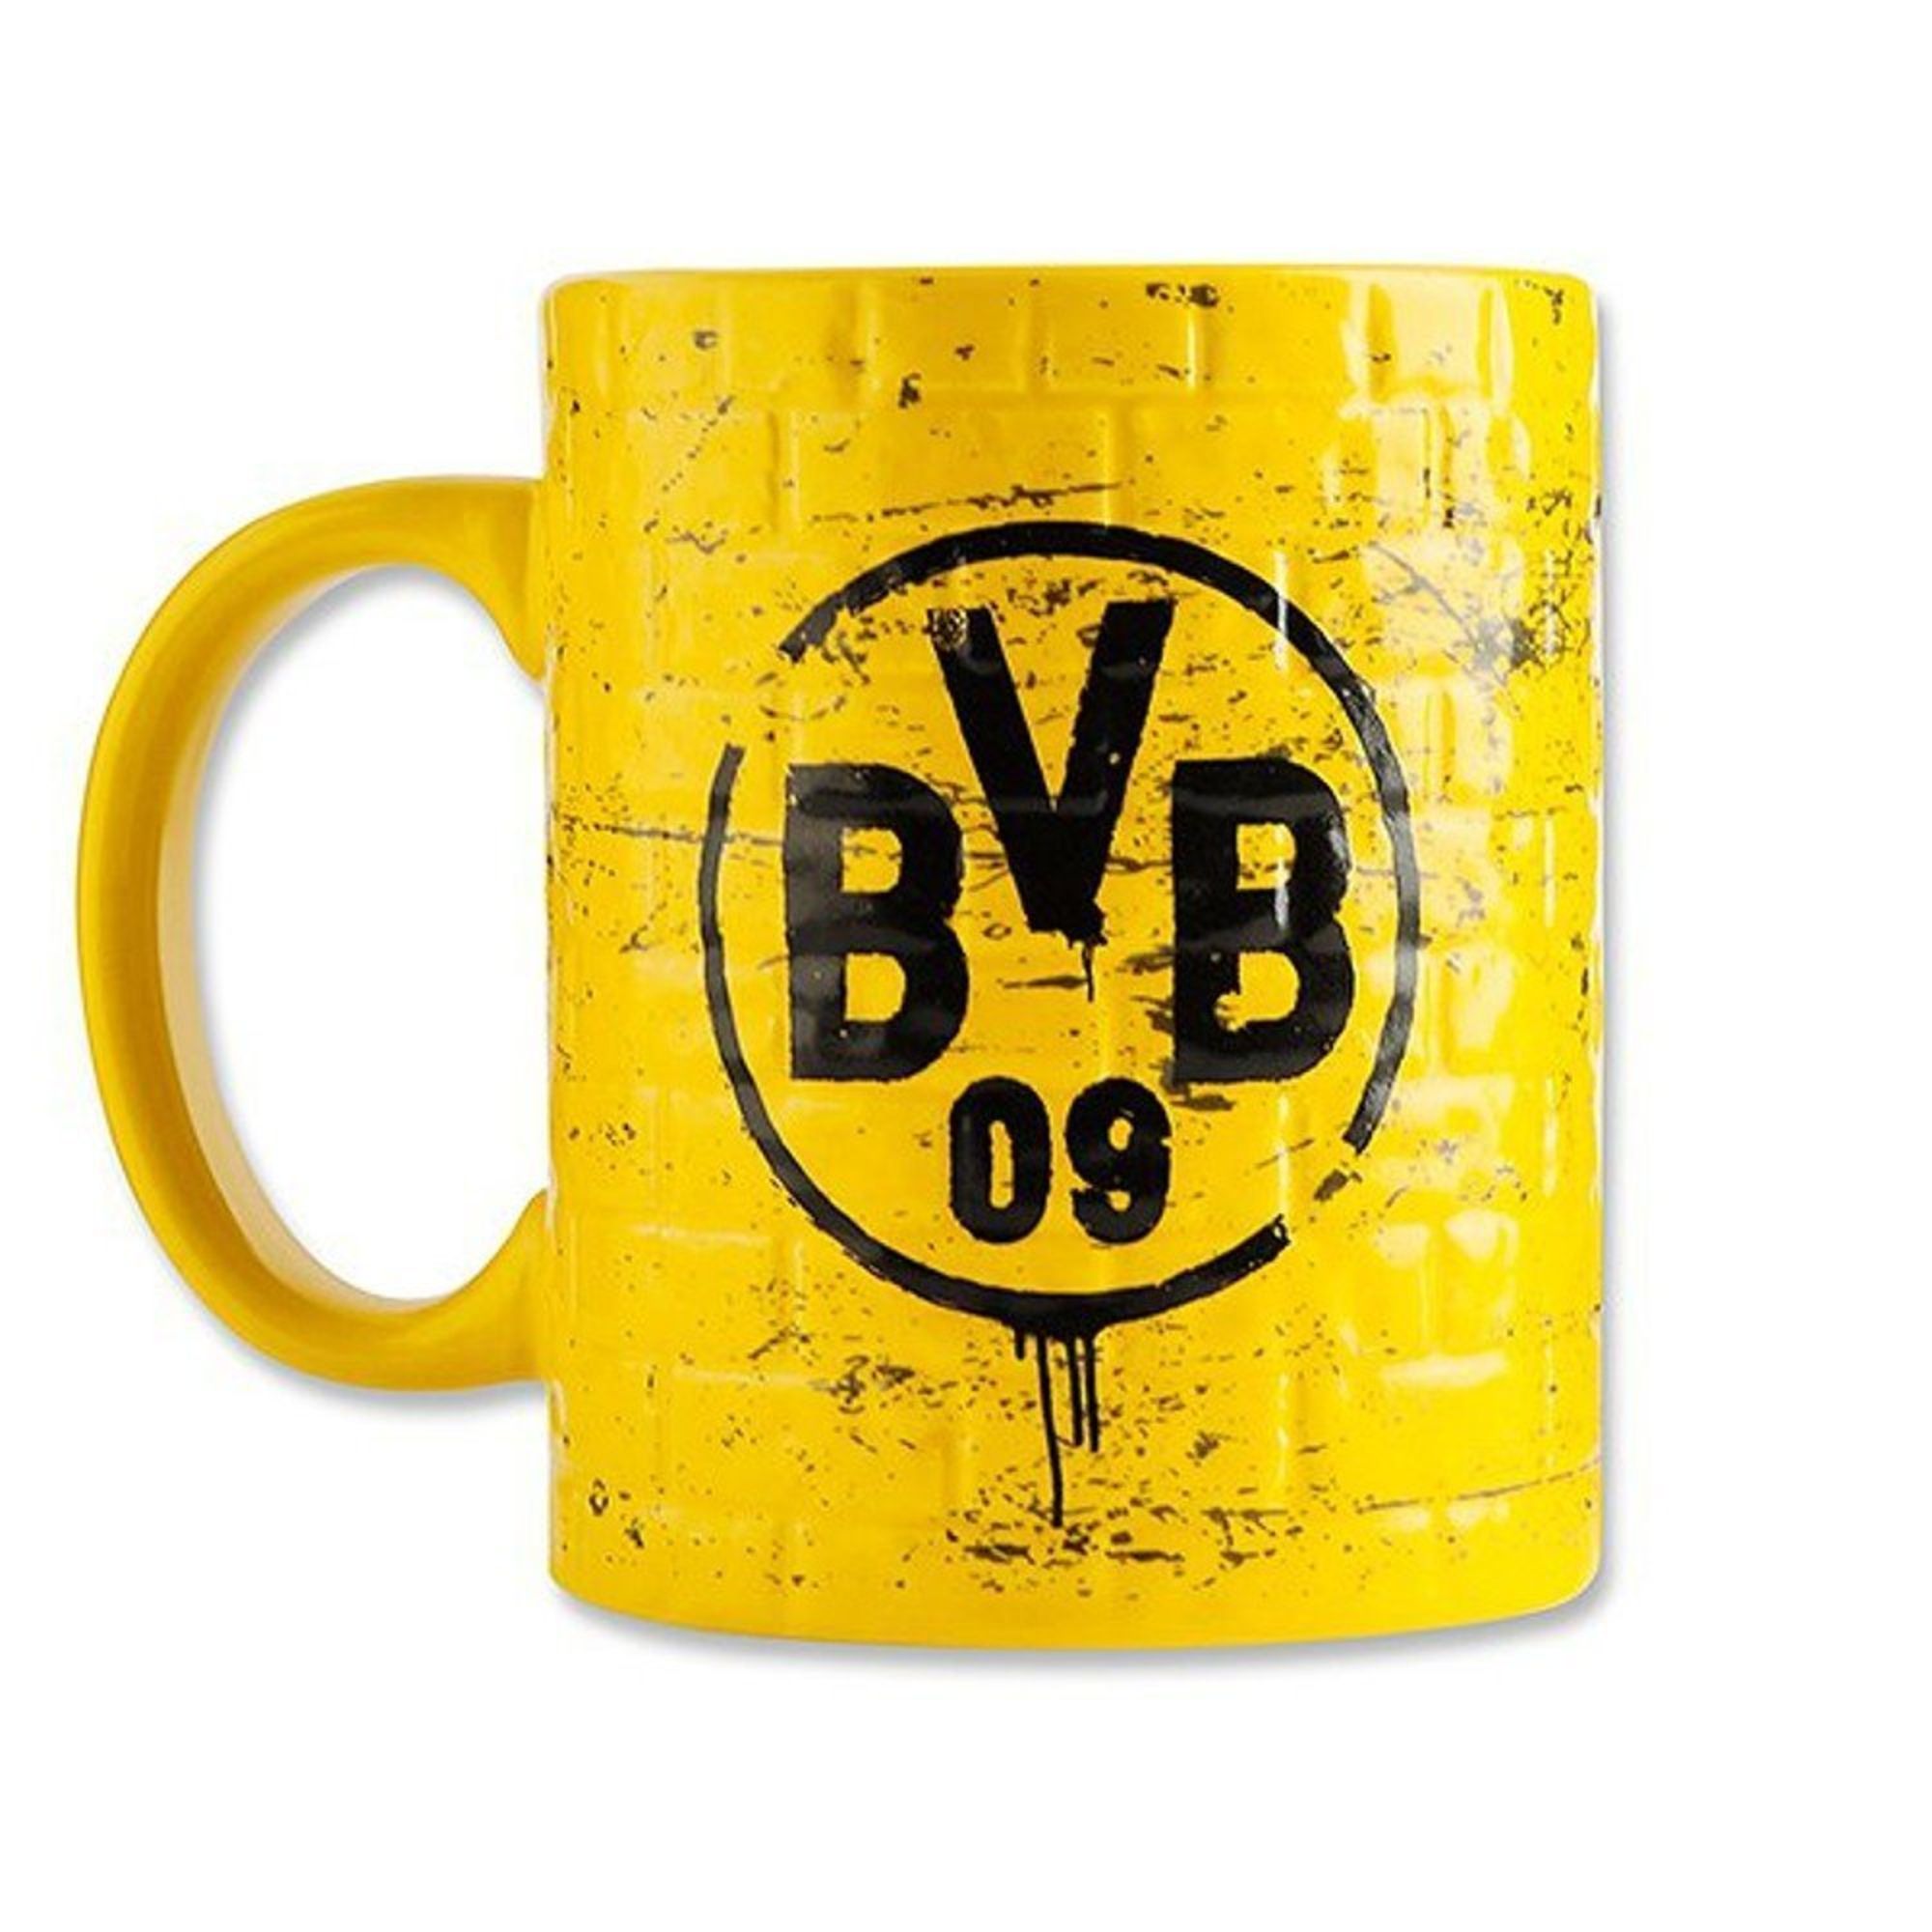 Borussia Dortmund 09 Aufkleber Auto Signet Alt Verein